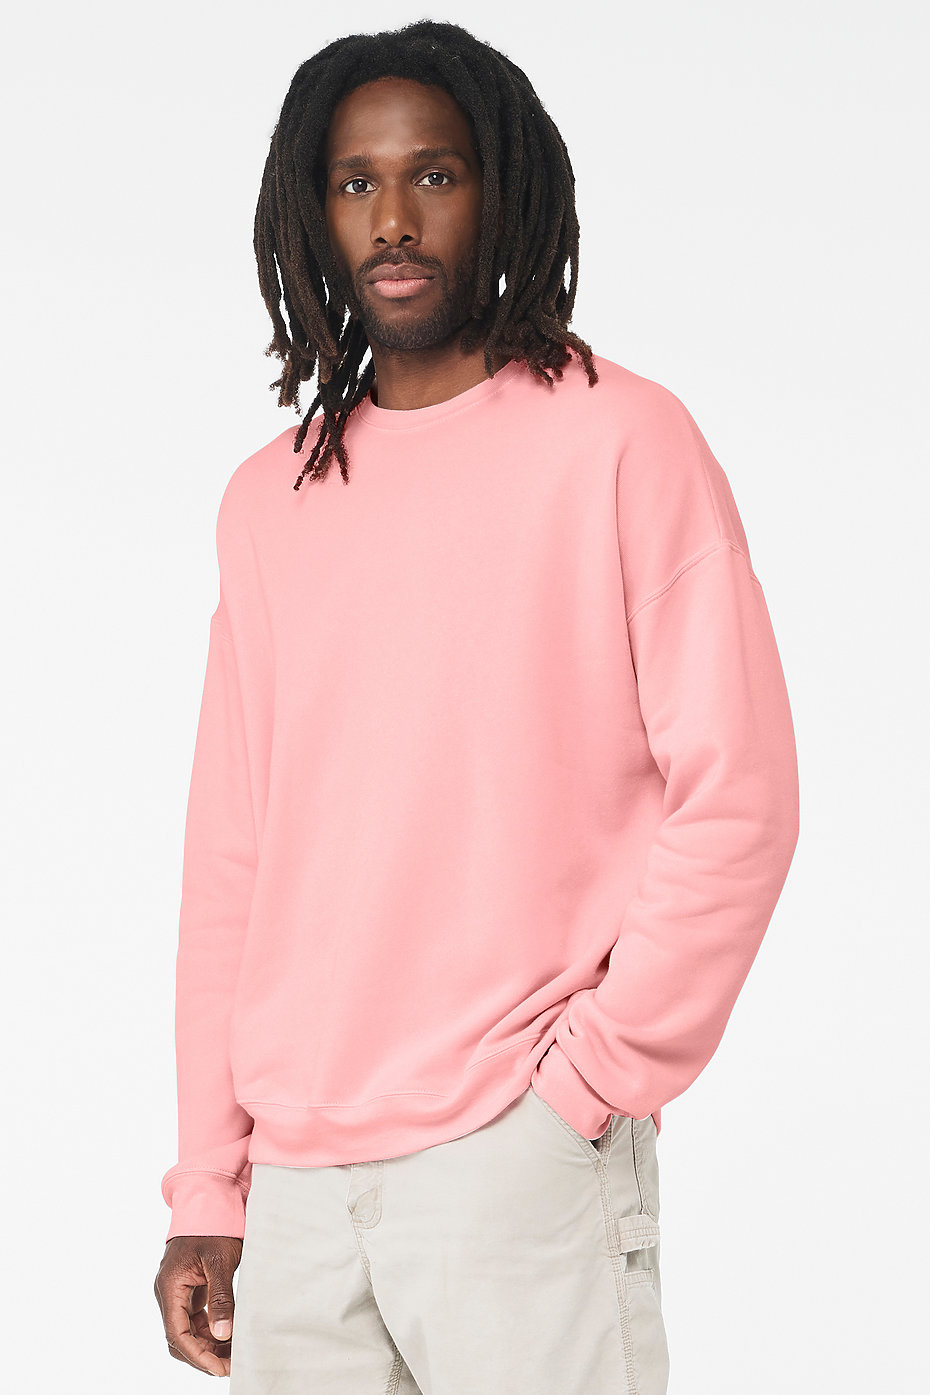 Round Crew Neck Plus Size Sweatshirt with Side Pockets